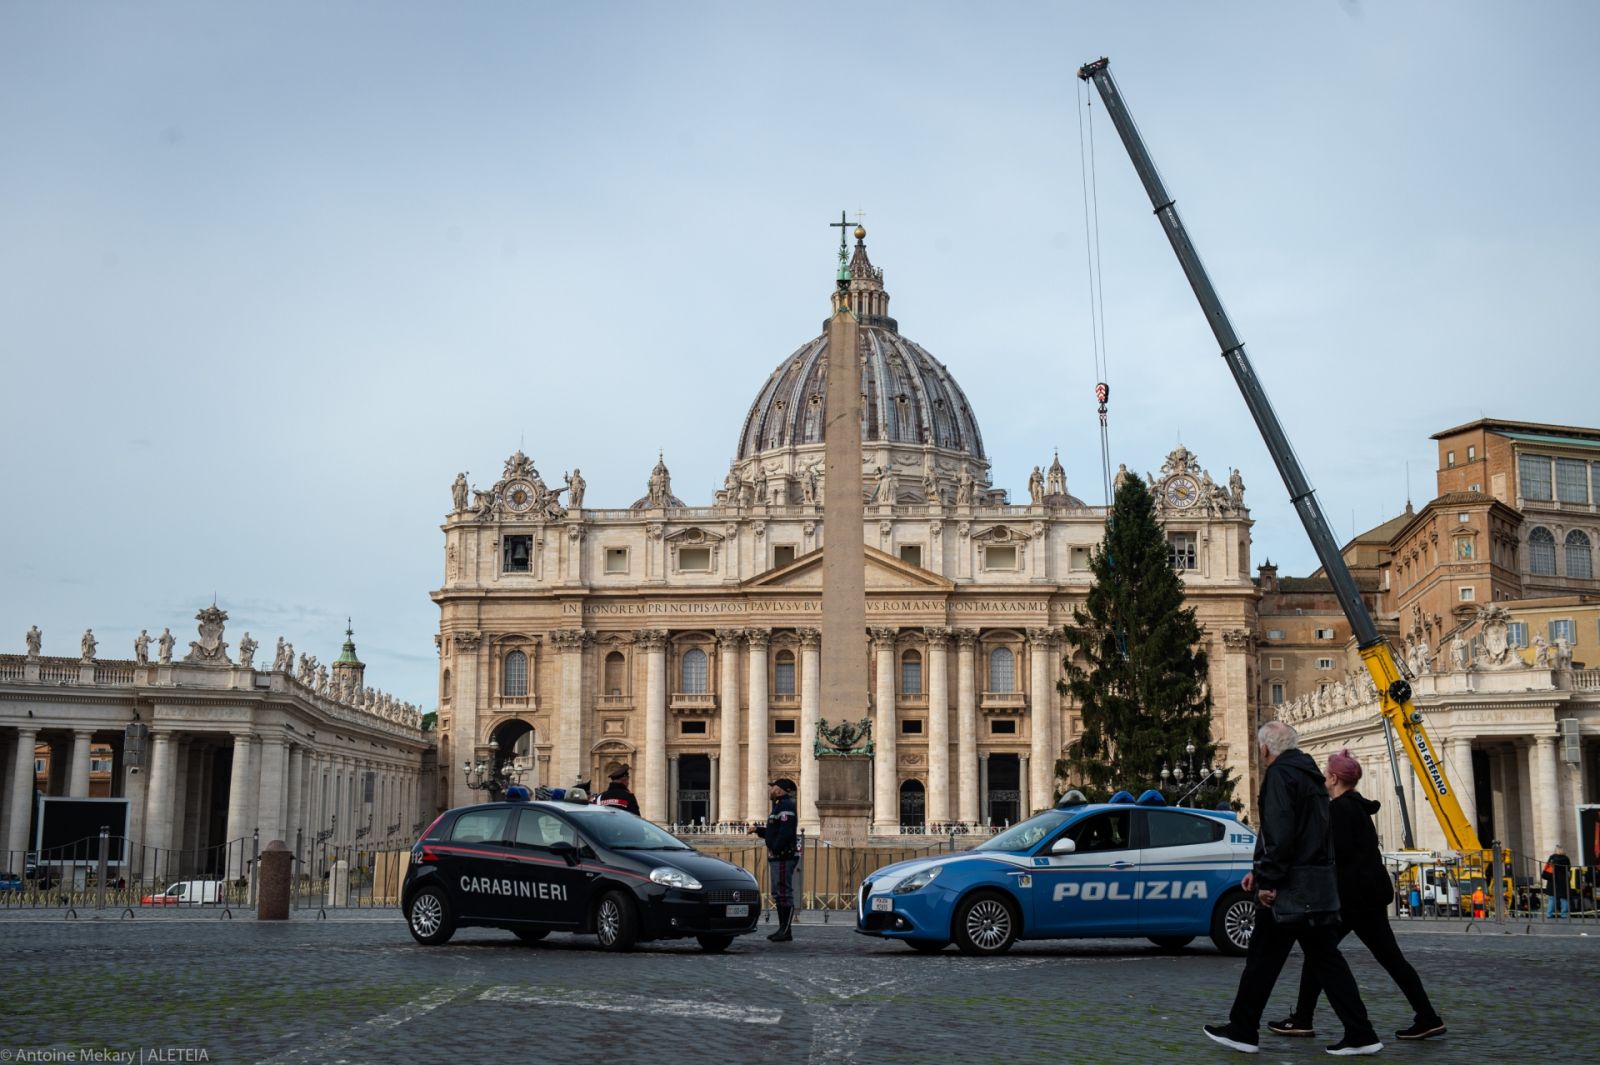 Рождественская елка в Ватикане. Фото: Aleteia